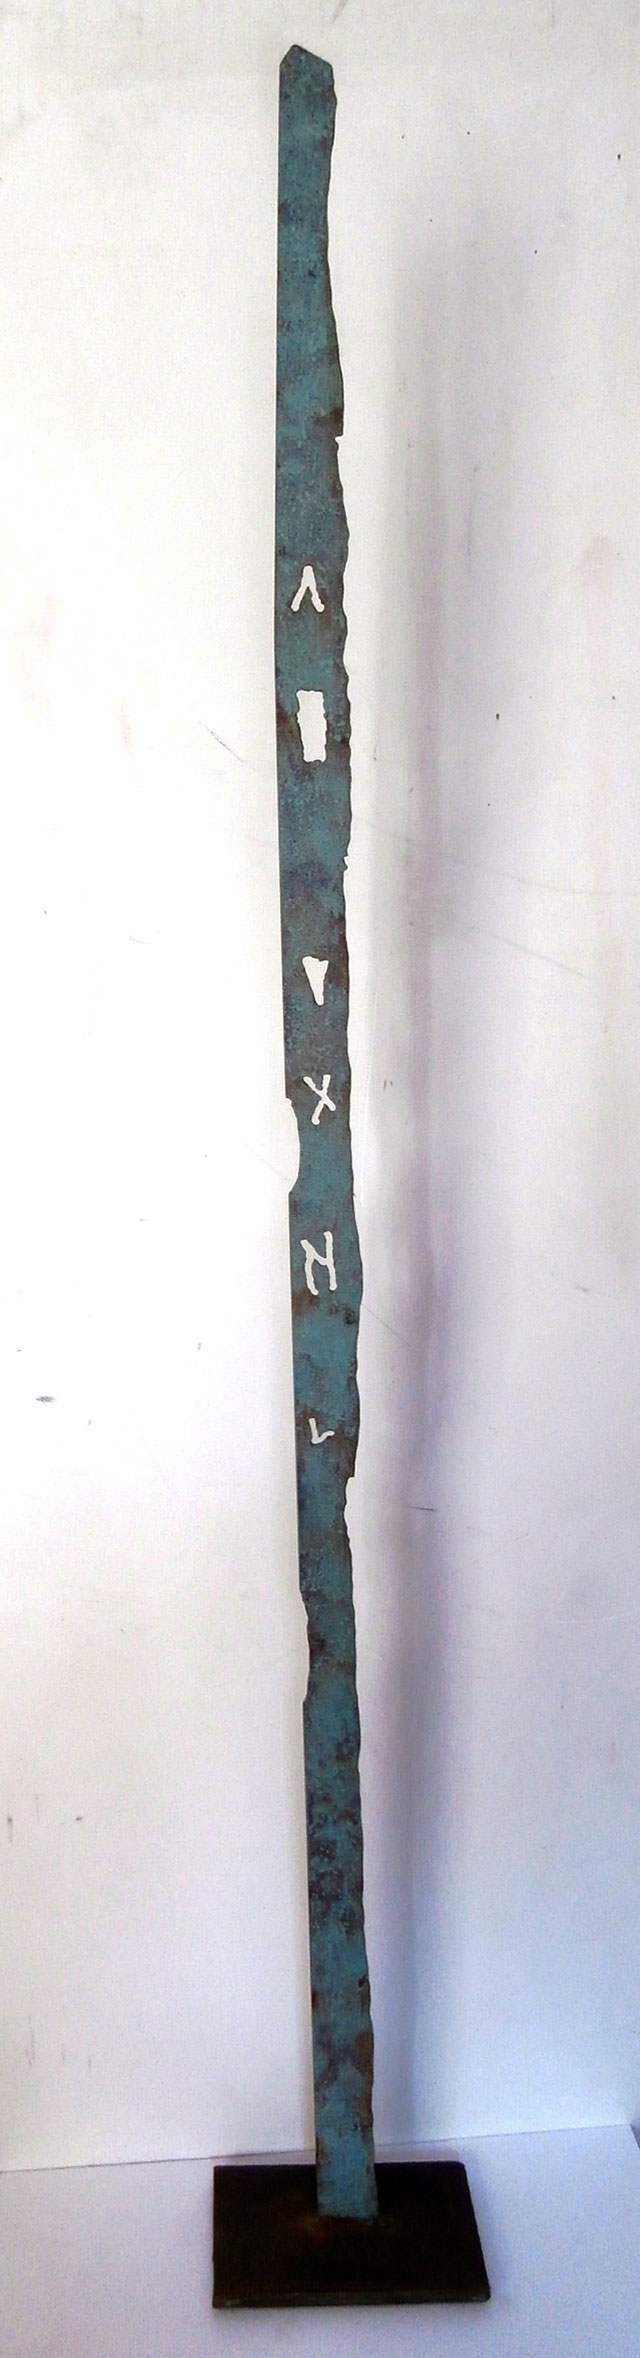 Stele YX,
102x3 cm,
2006